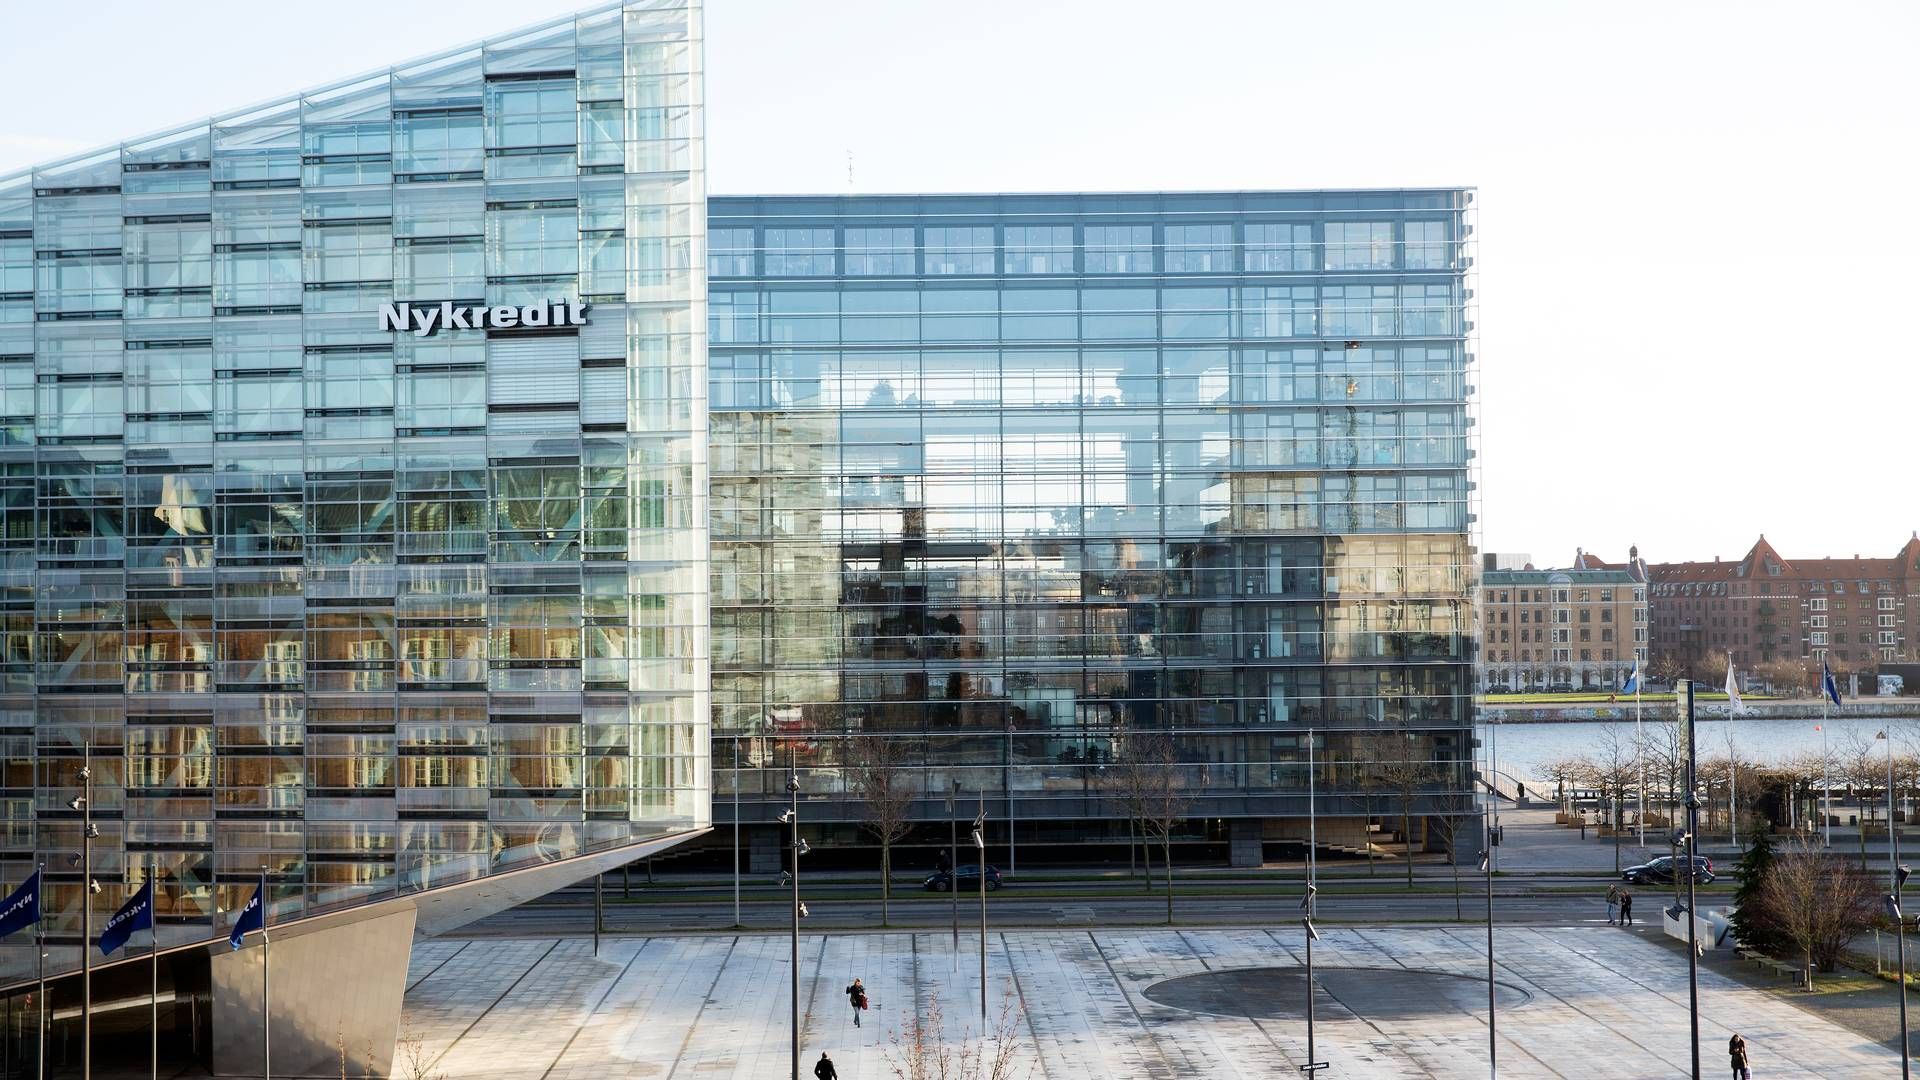 The Nykredit headquarters in Copenhagen. | Photo: Thomas Borberg